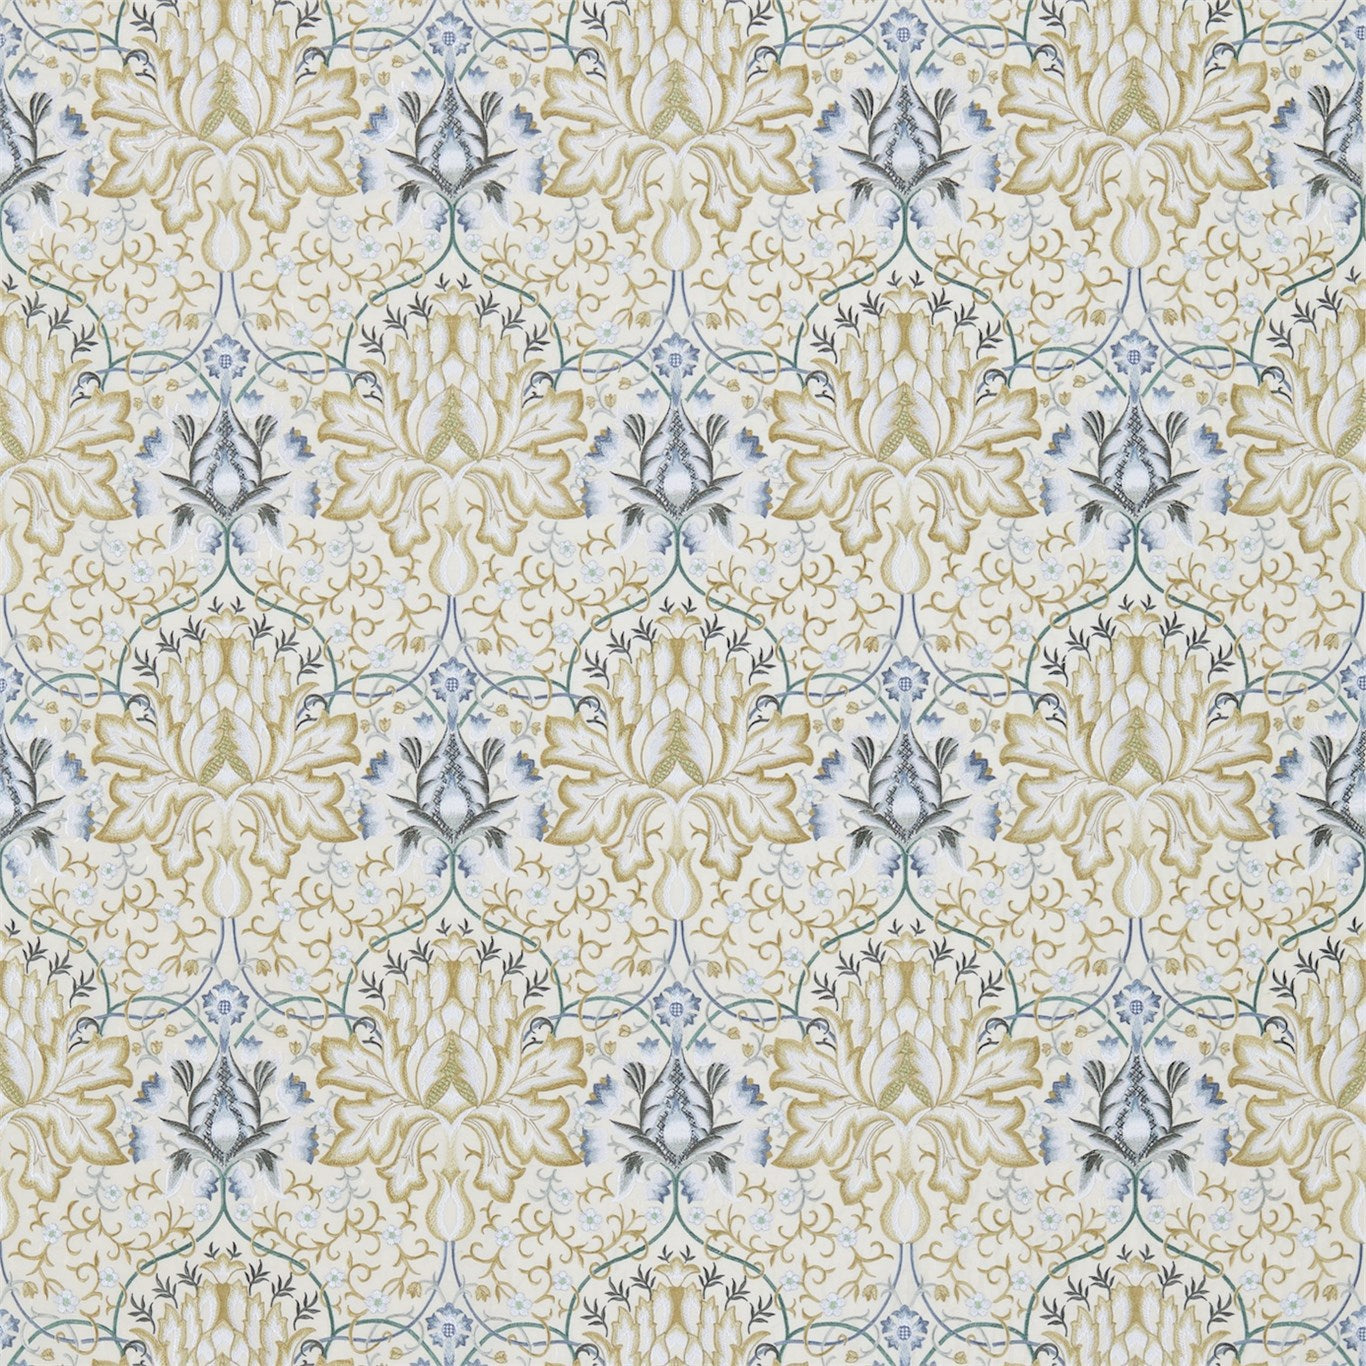 Artichoke Embroidery Fabric by Morris & Co. - DMEM234544 - Soft Gold/Cream